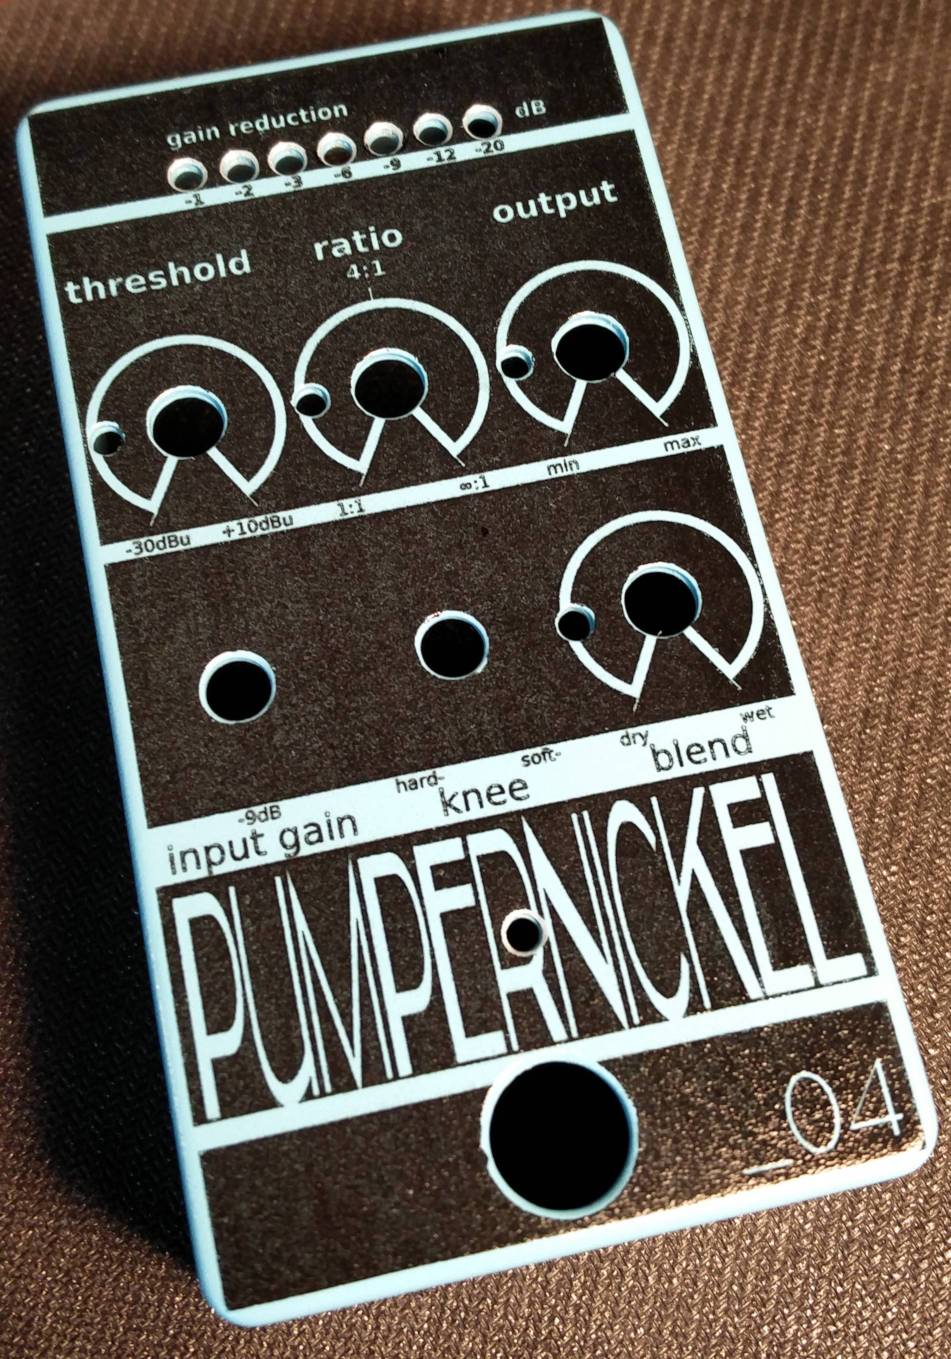 Pumpernickel-084